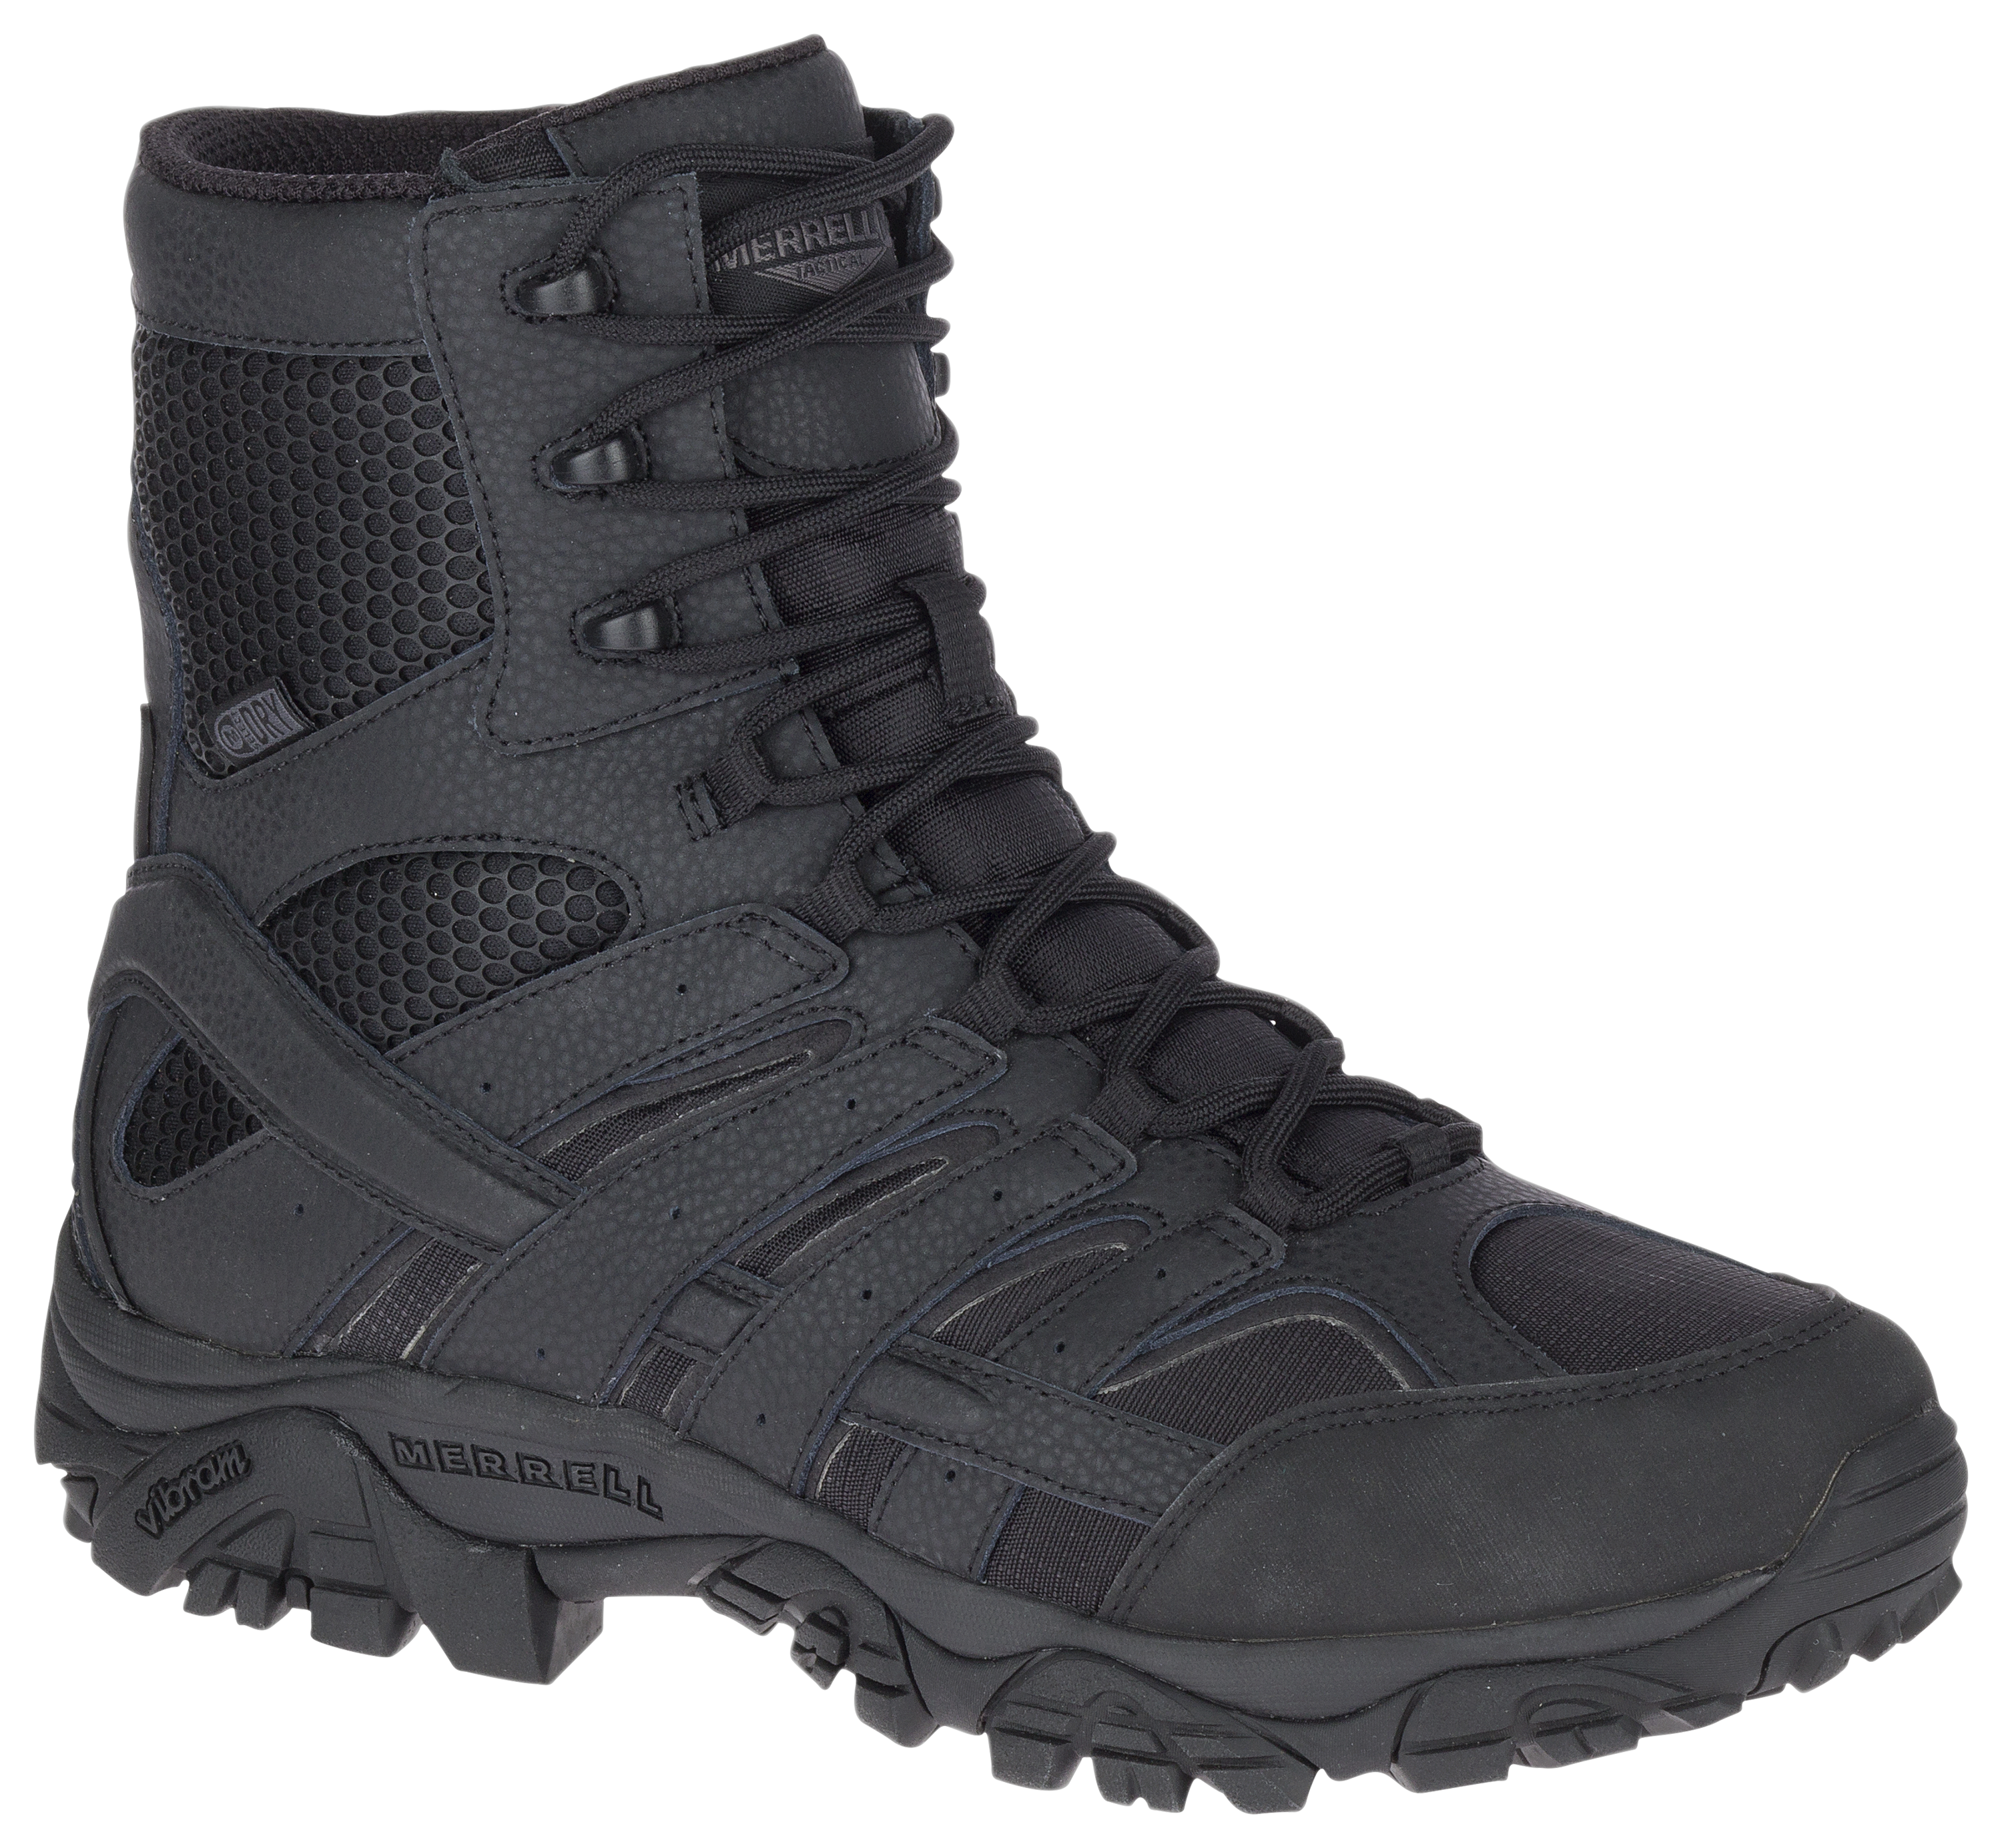 Merrell Moab 2 Waterproof Tactical Boots for Men - Black - 10 5M